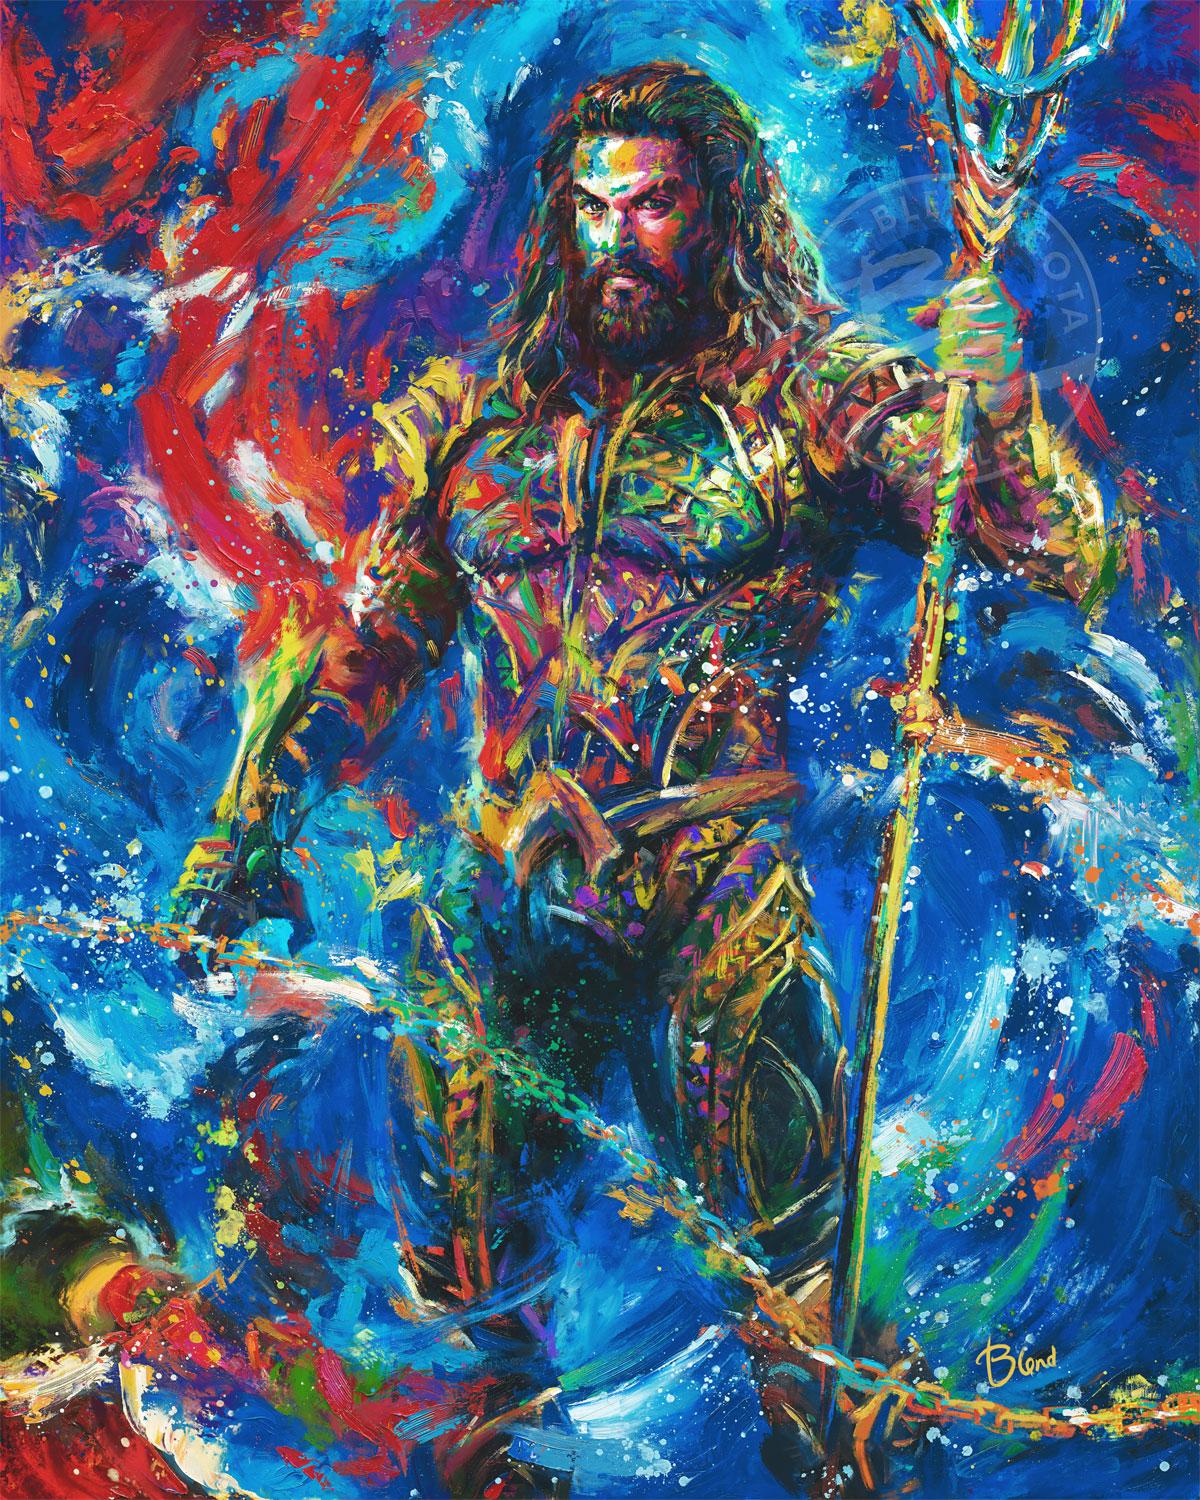 Blend Cota Figurative Painting - Aquaman - oil on canvas painting of Jason Momoa as "The Aquaman"